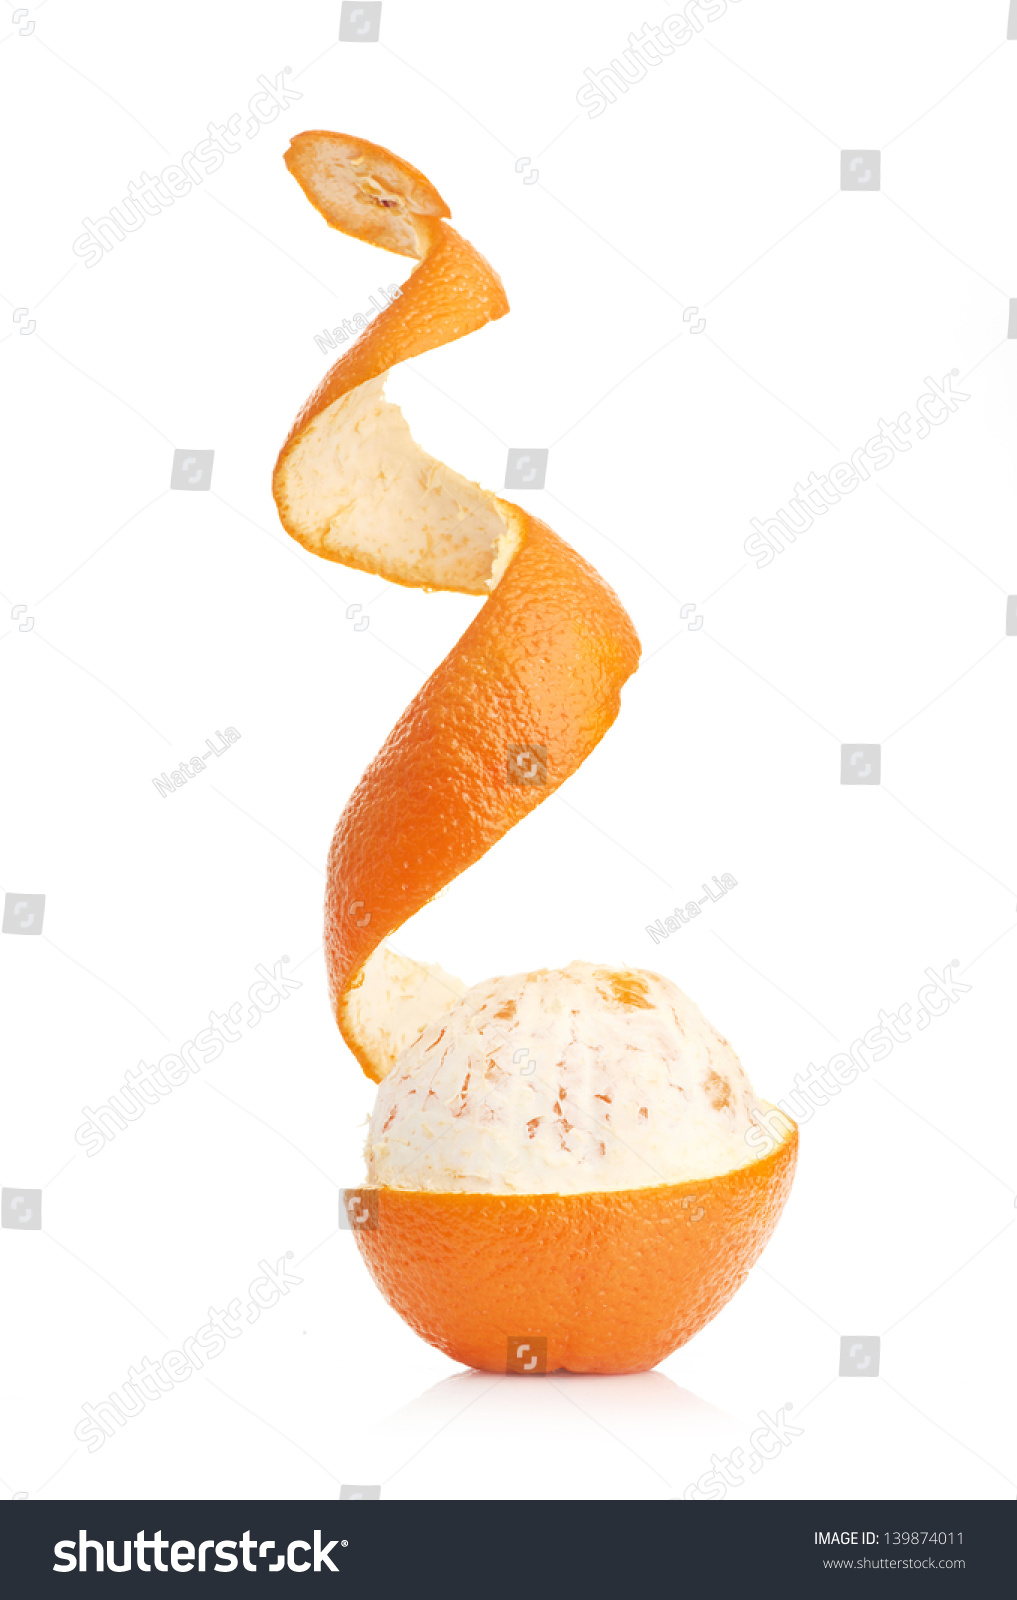 Orange With Peeled Spiral Skin Isolated On White Background Stock Photo